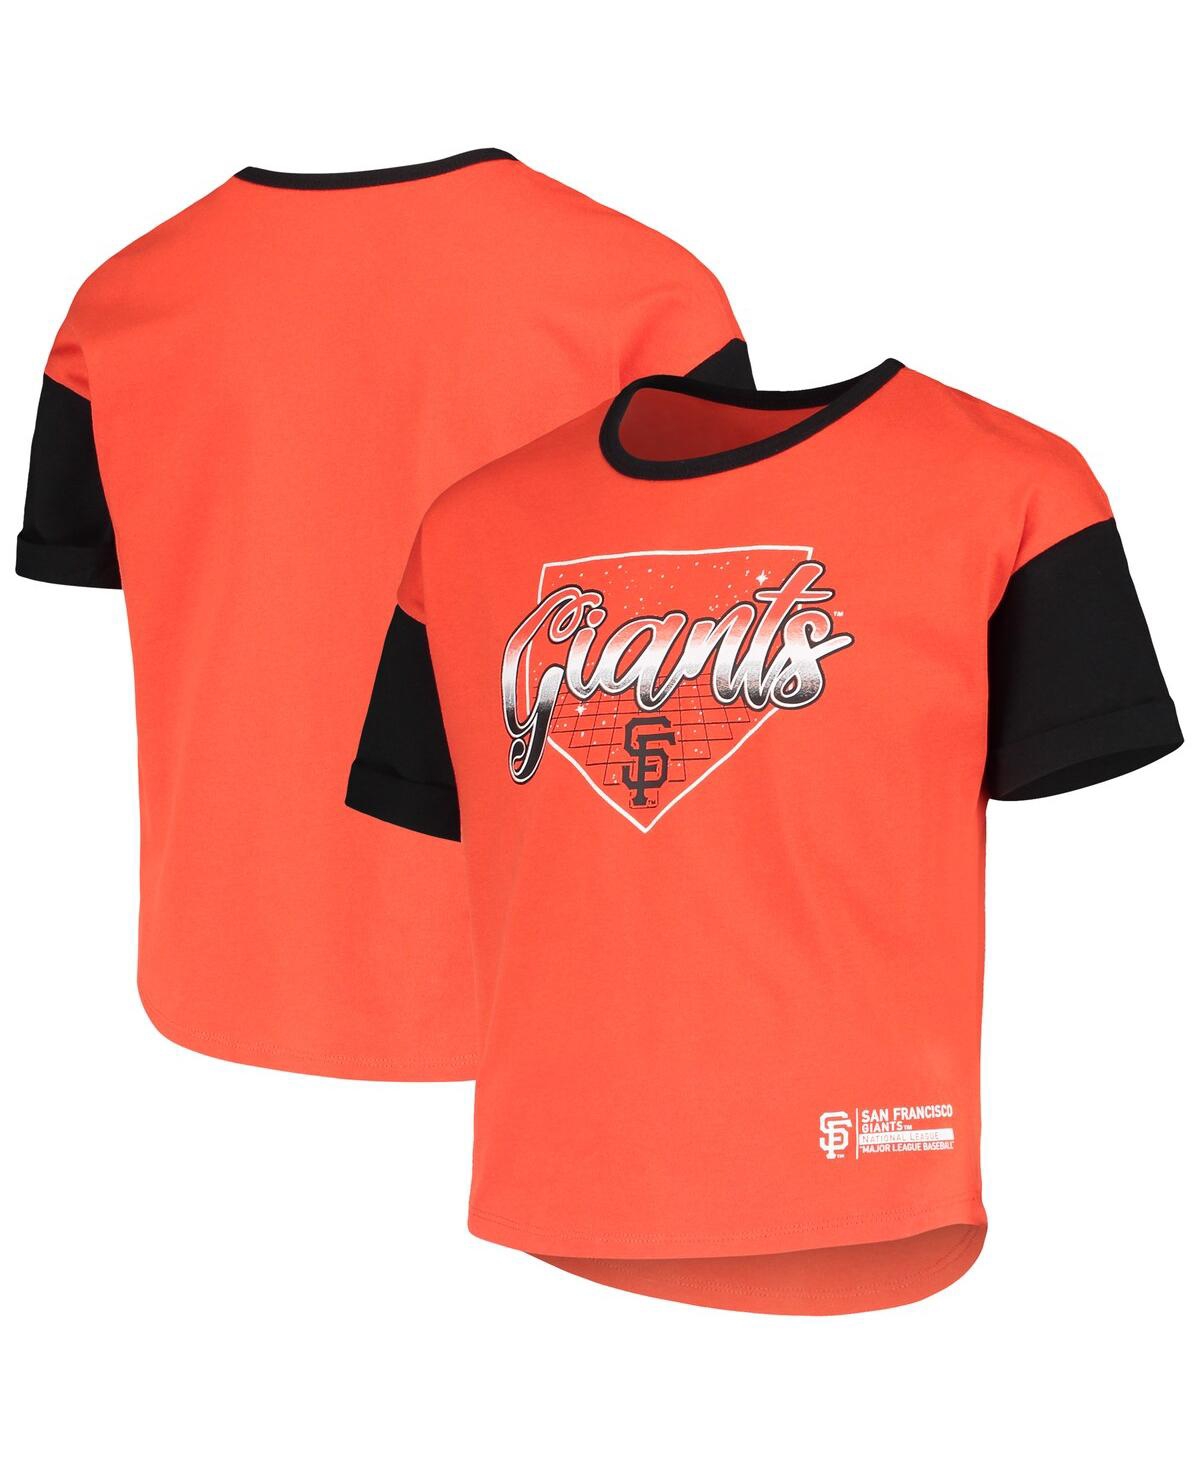 Outerstuff Kids' Big Girls Orange San Francisco Giants Bleachers T-shirt